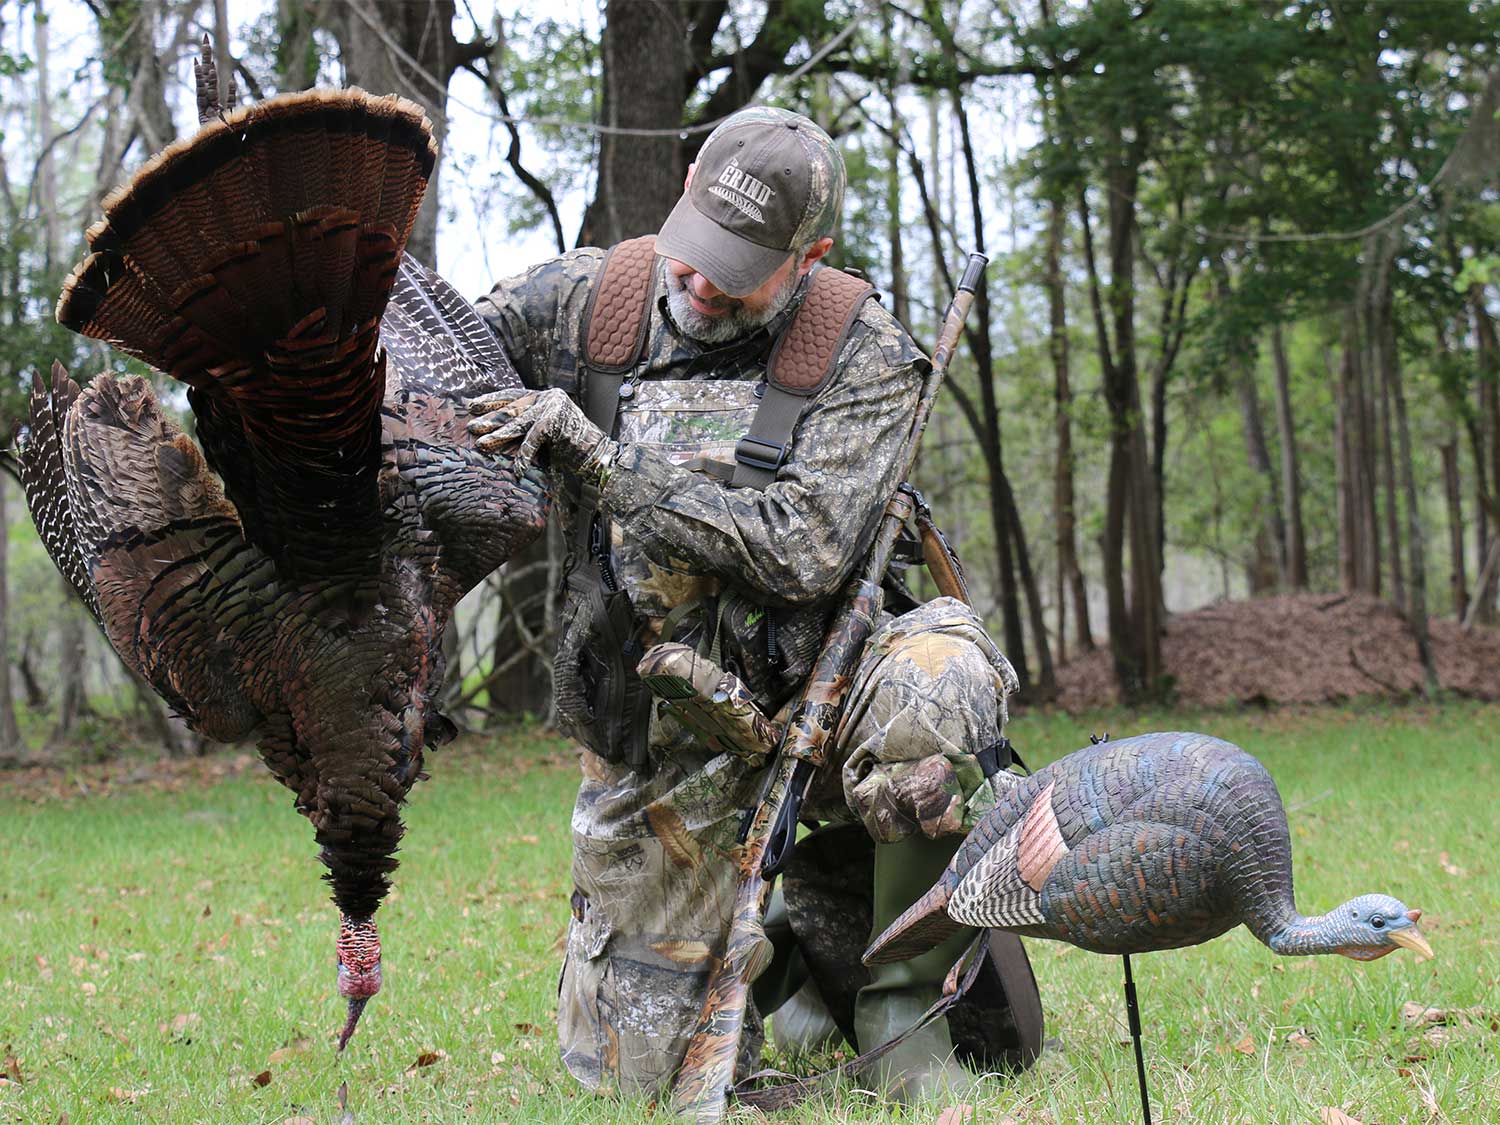 A hunter holds up a turkey next